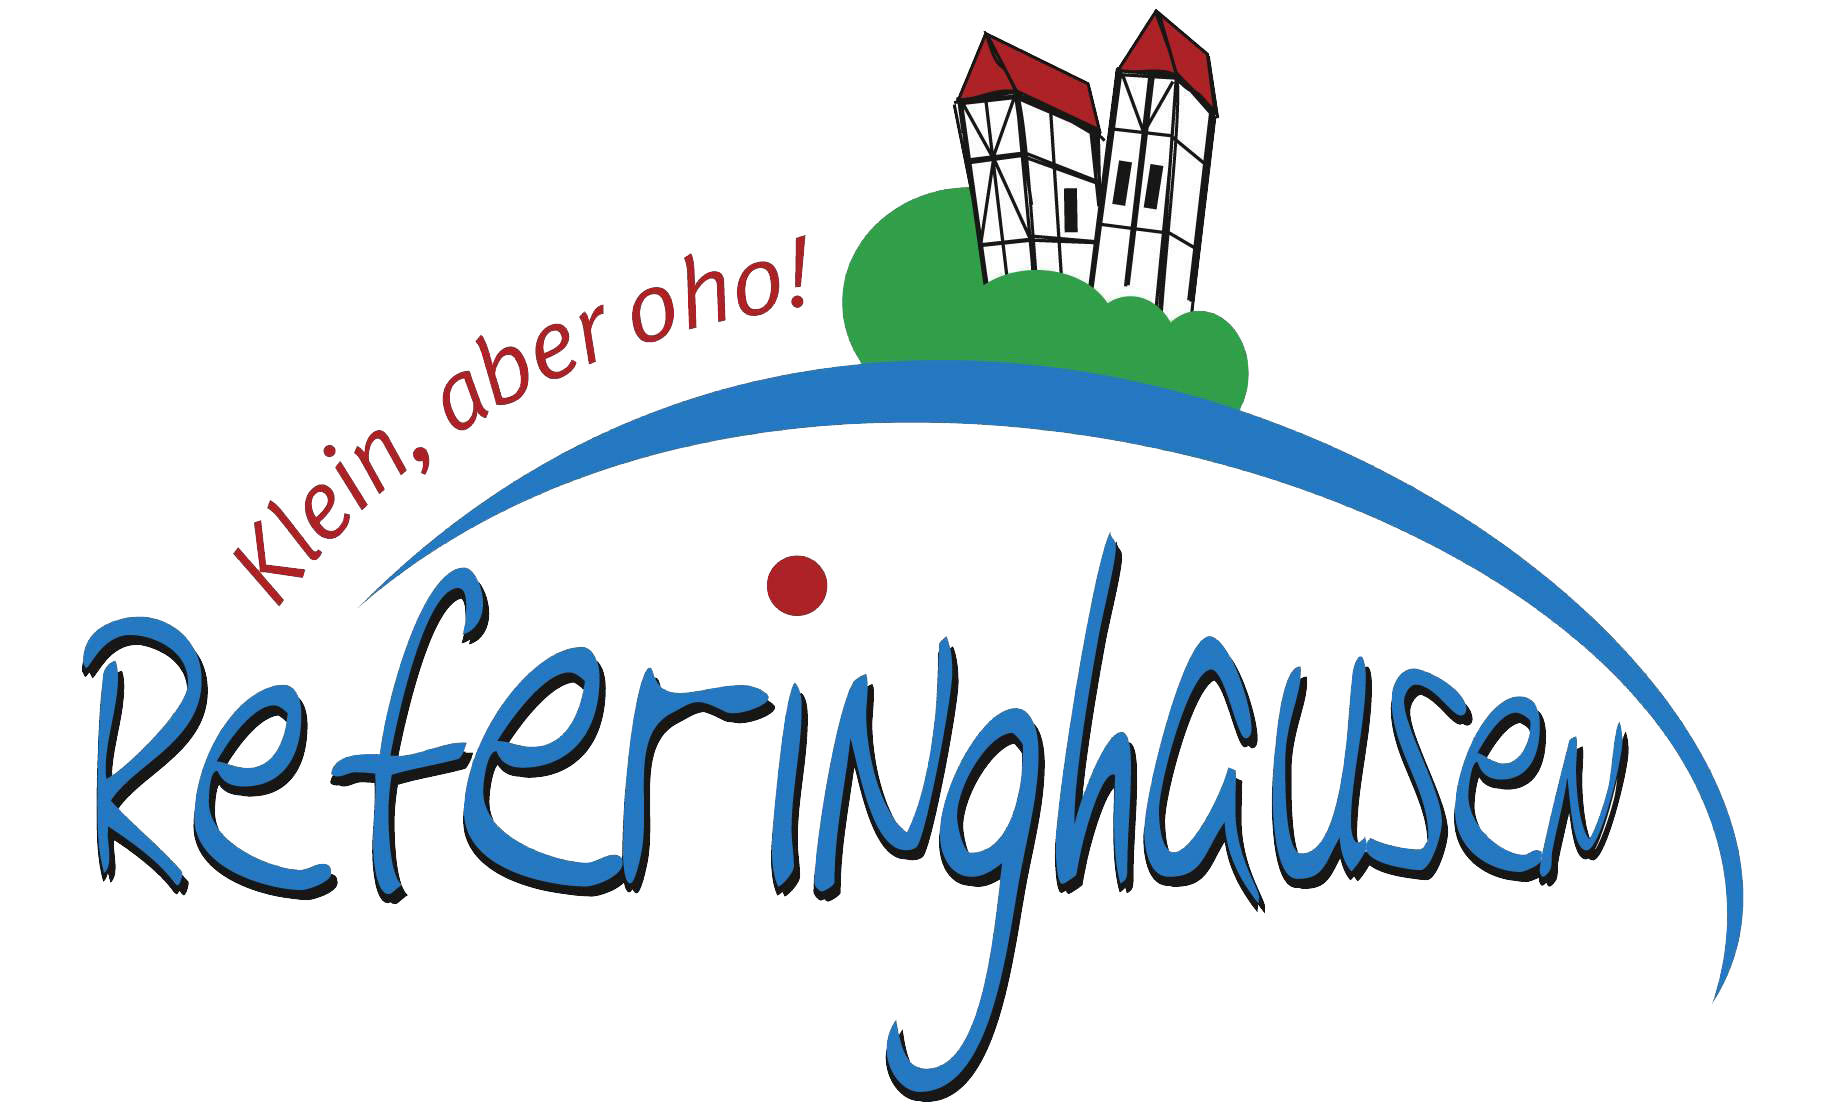 Referinghausen